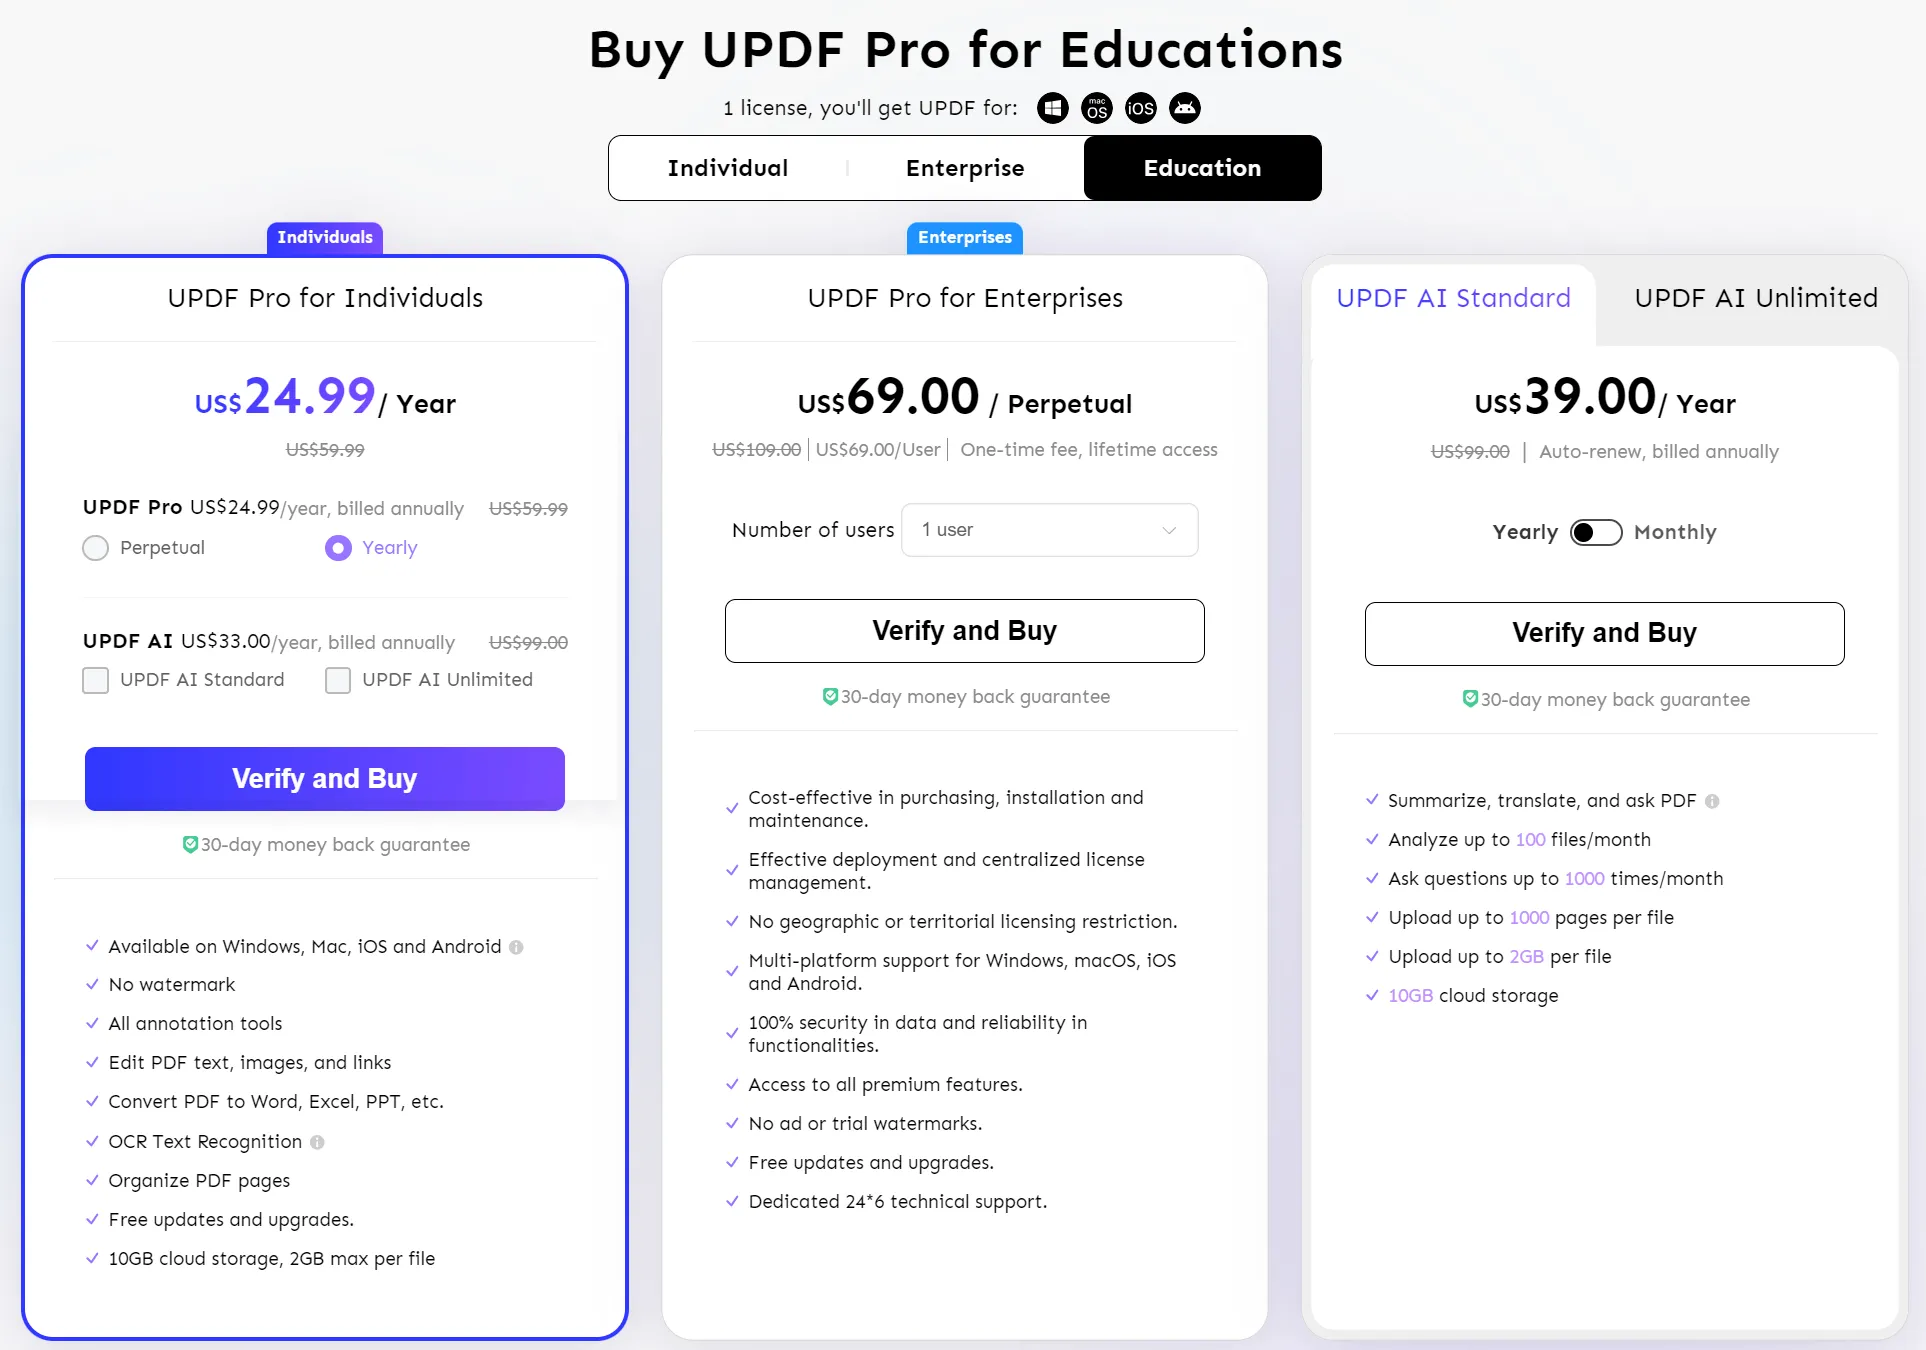 UPDF education plans